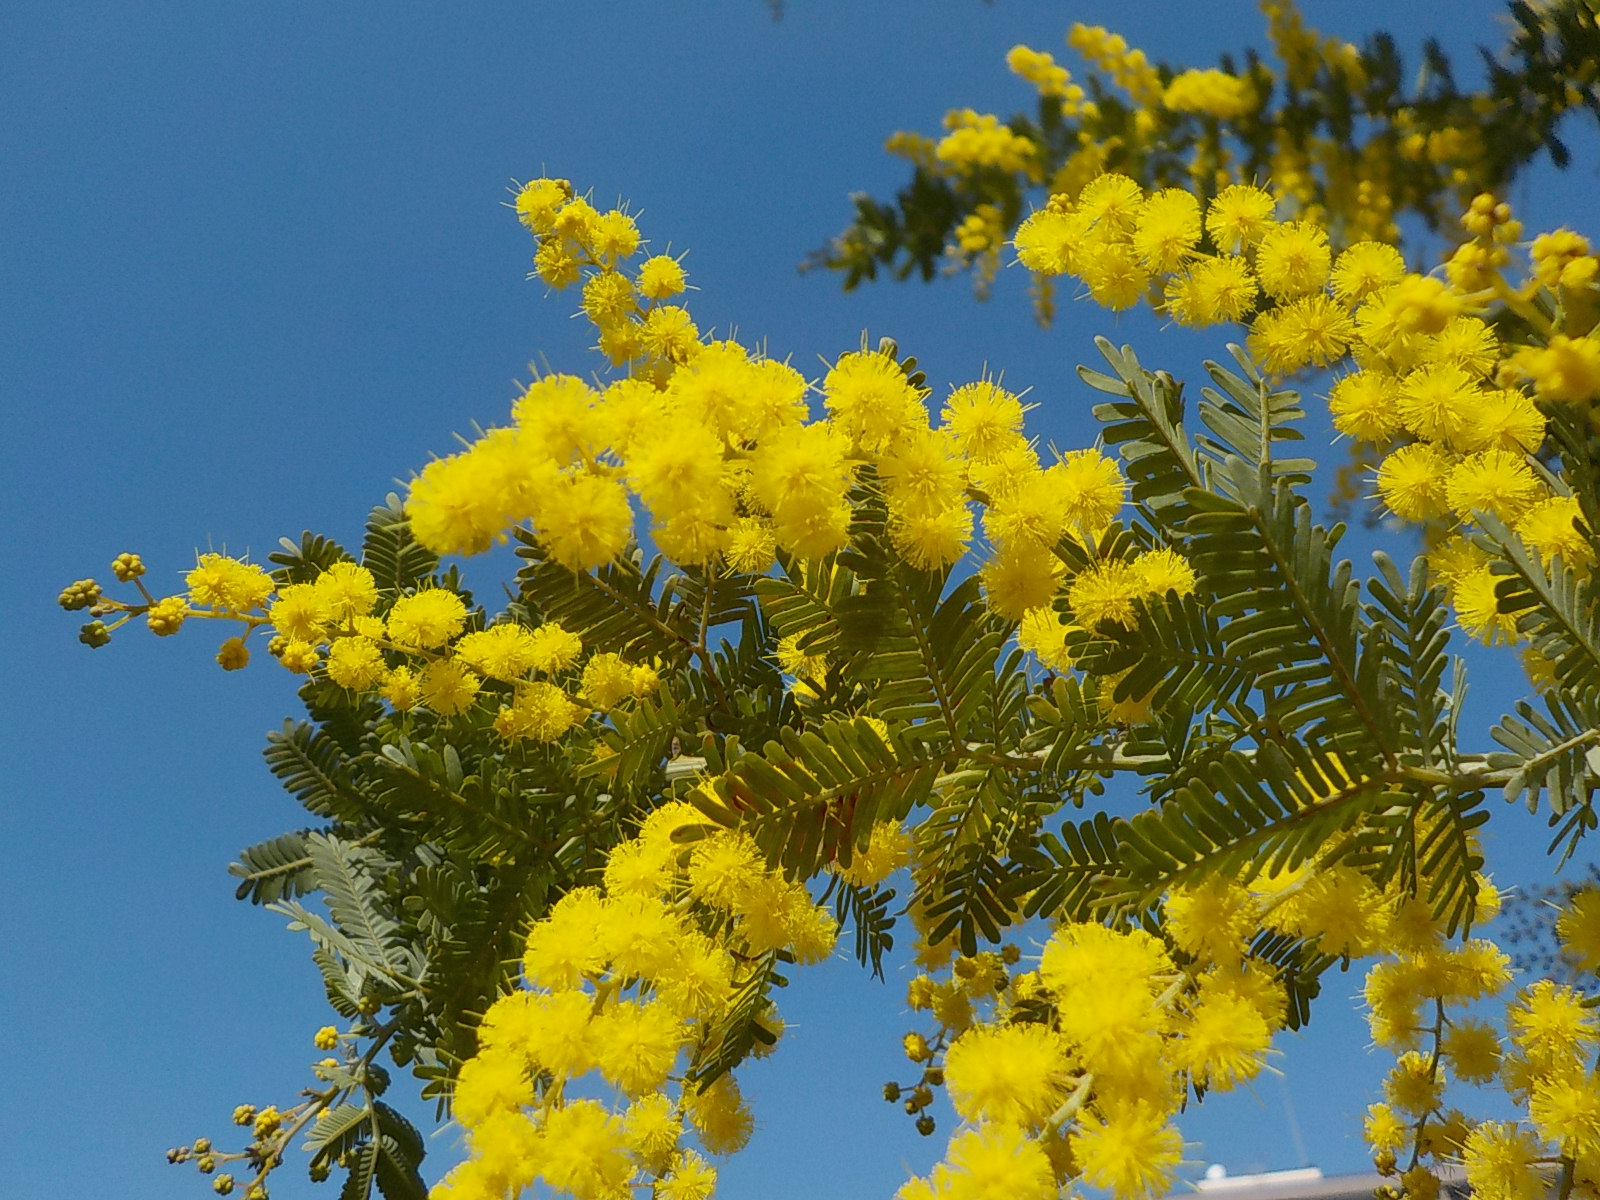 Uzivatel 都立汐入公園 Na Twitteru ミモザアカシア ミモザとは 黄色い花を咲かせるアカシア の総称です 小さな丸い花が 花火模様で集まり優しく甘い香りが漂っています 3月8日はミモザの日 ぜひ奥様 お母様にプレゼントしてはいかがですか 都立公園 荒川区